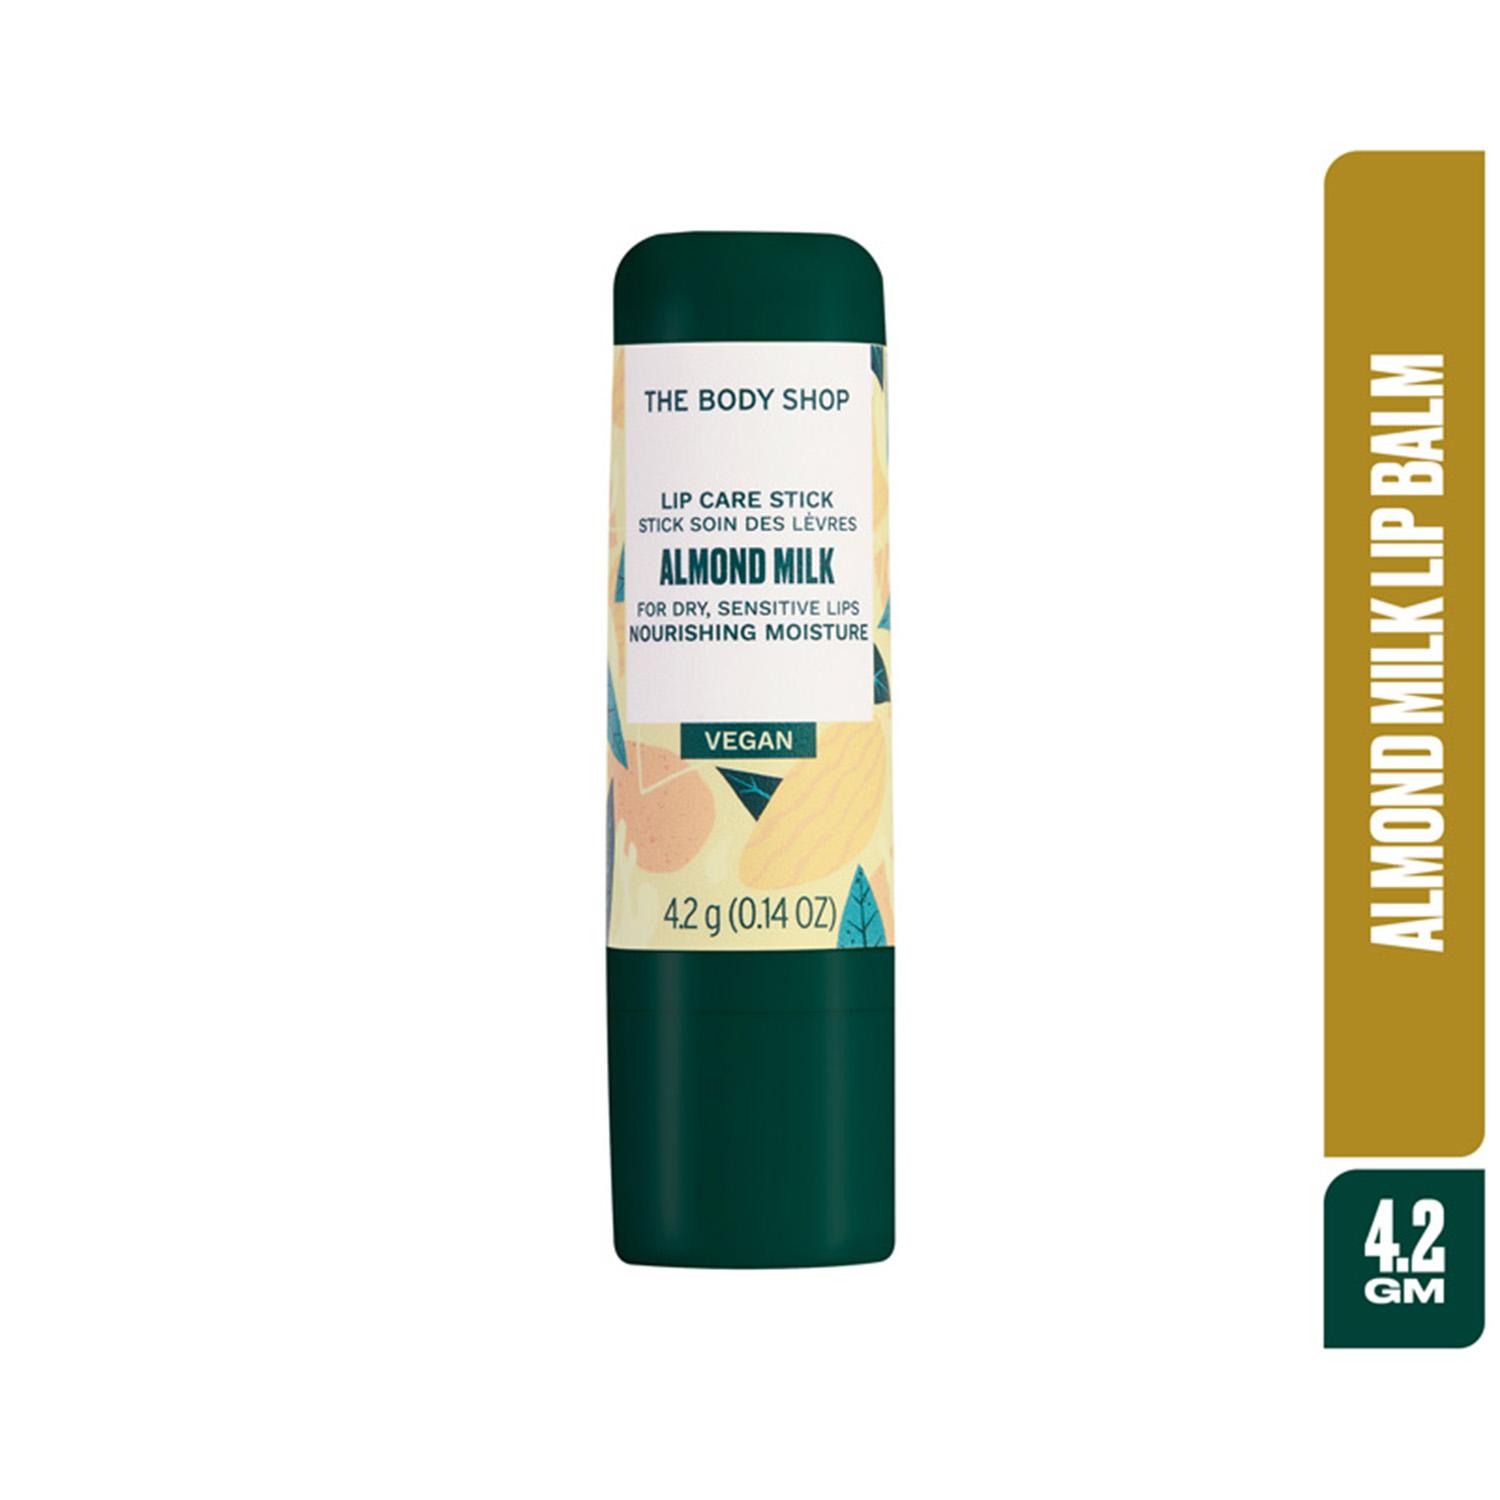 The Body Shop | The Body Shop Almond Milk Lip Care Stick (4.2g)